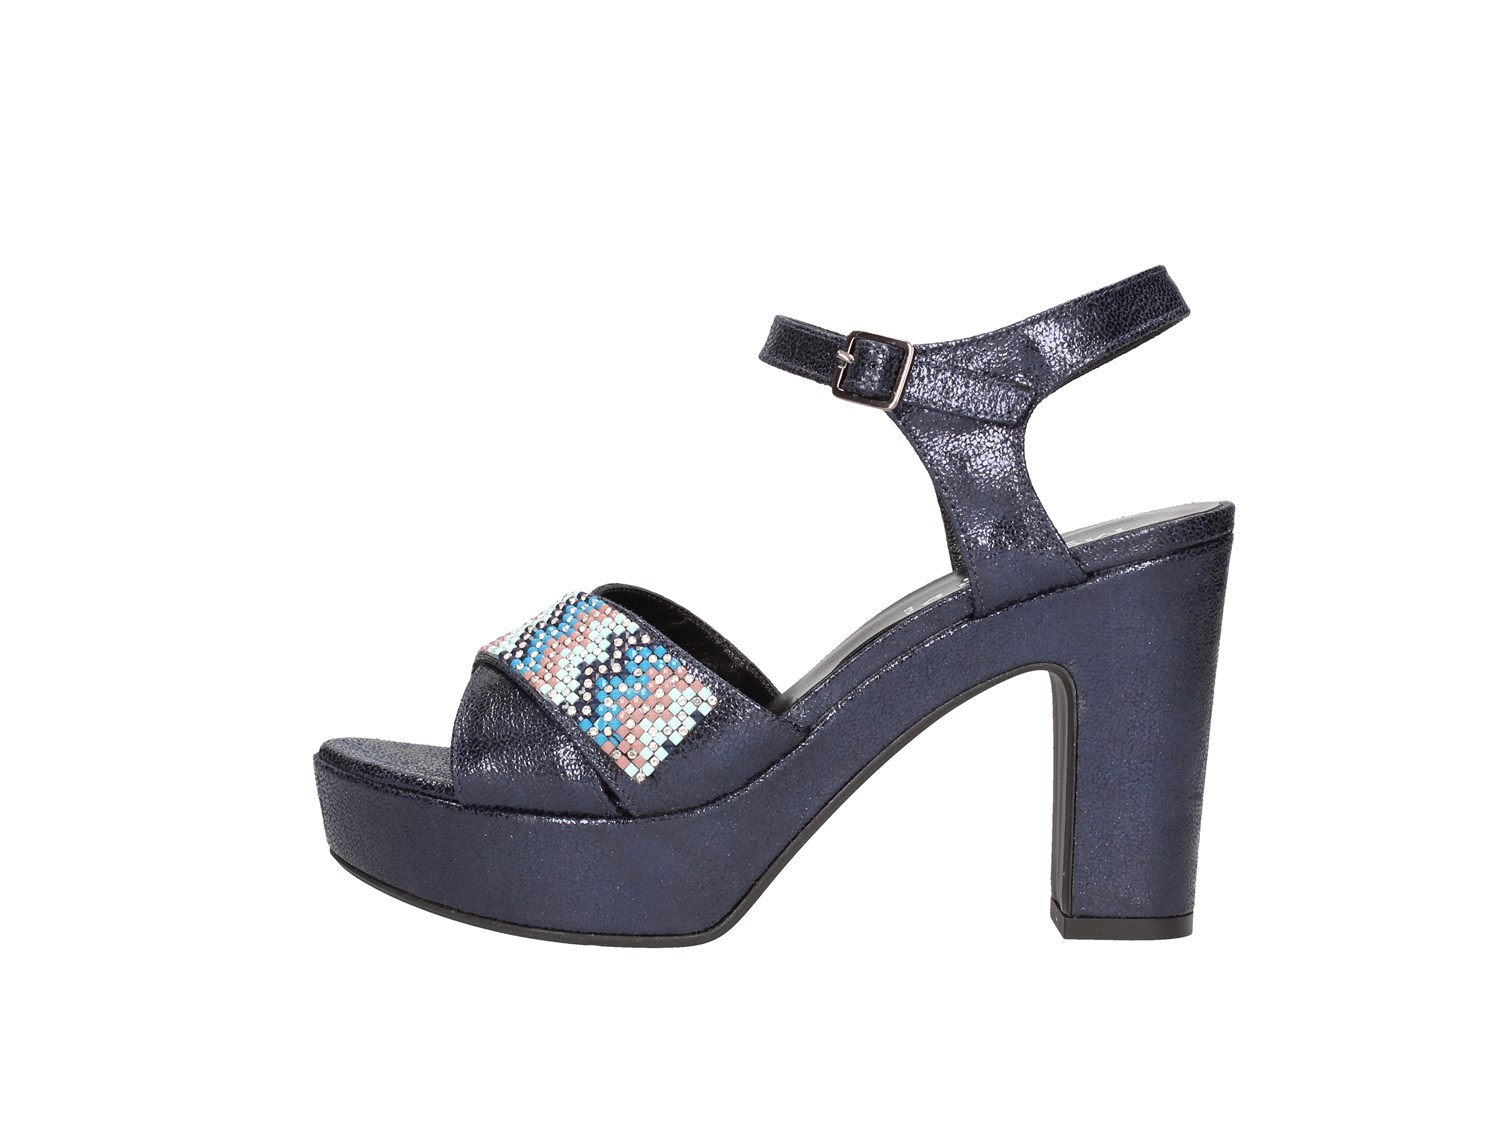 Martina B Mbss18-370-nv Blue Shoes Women Sandal